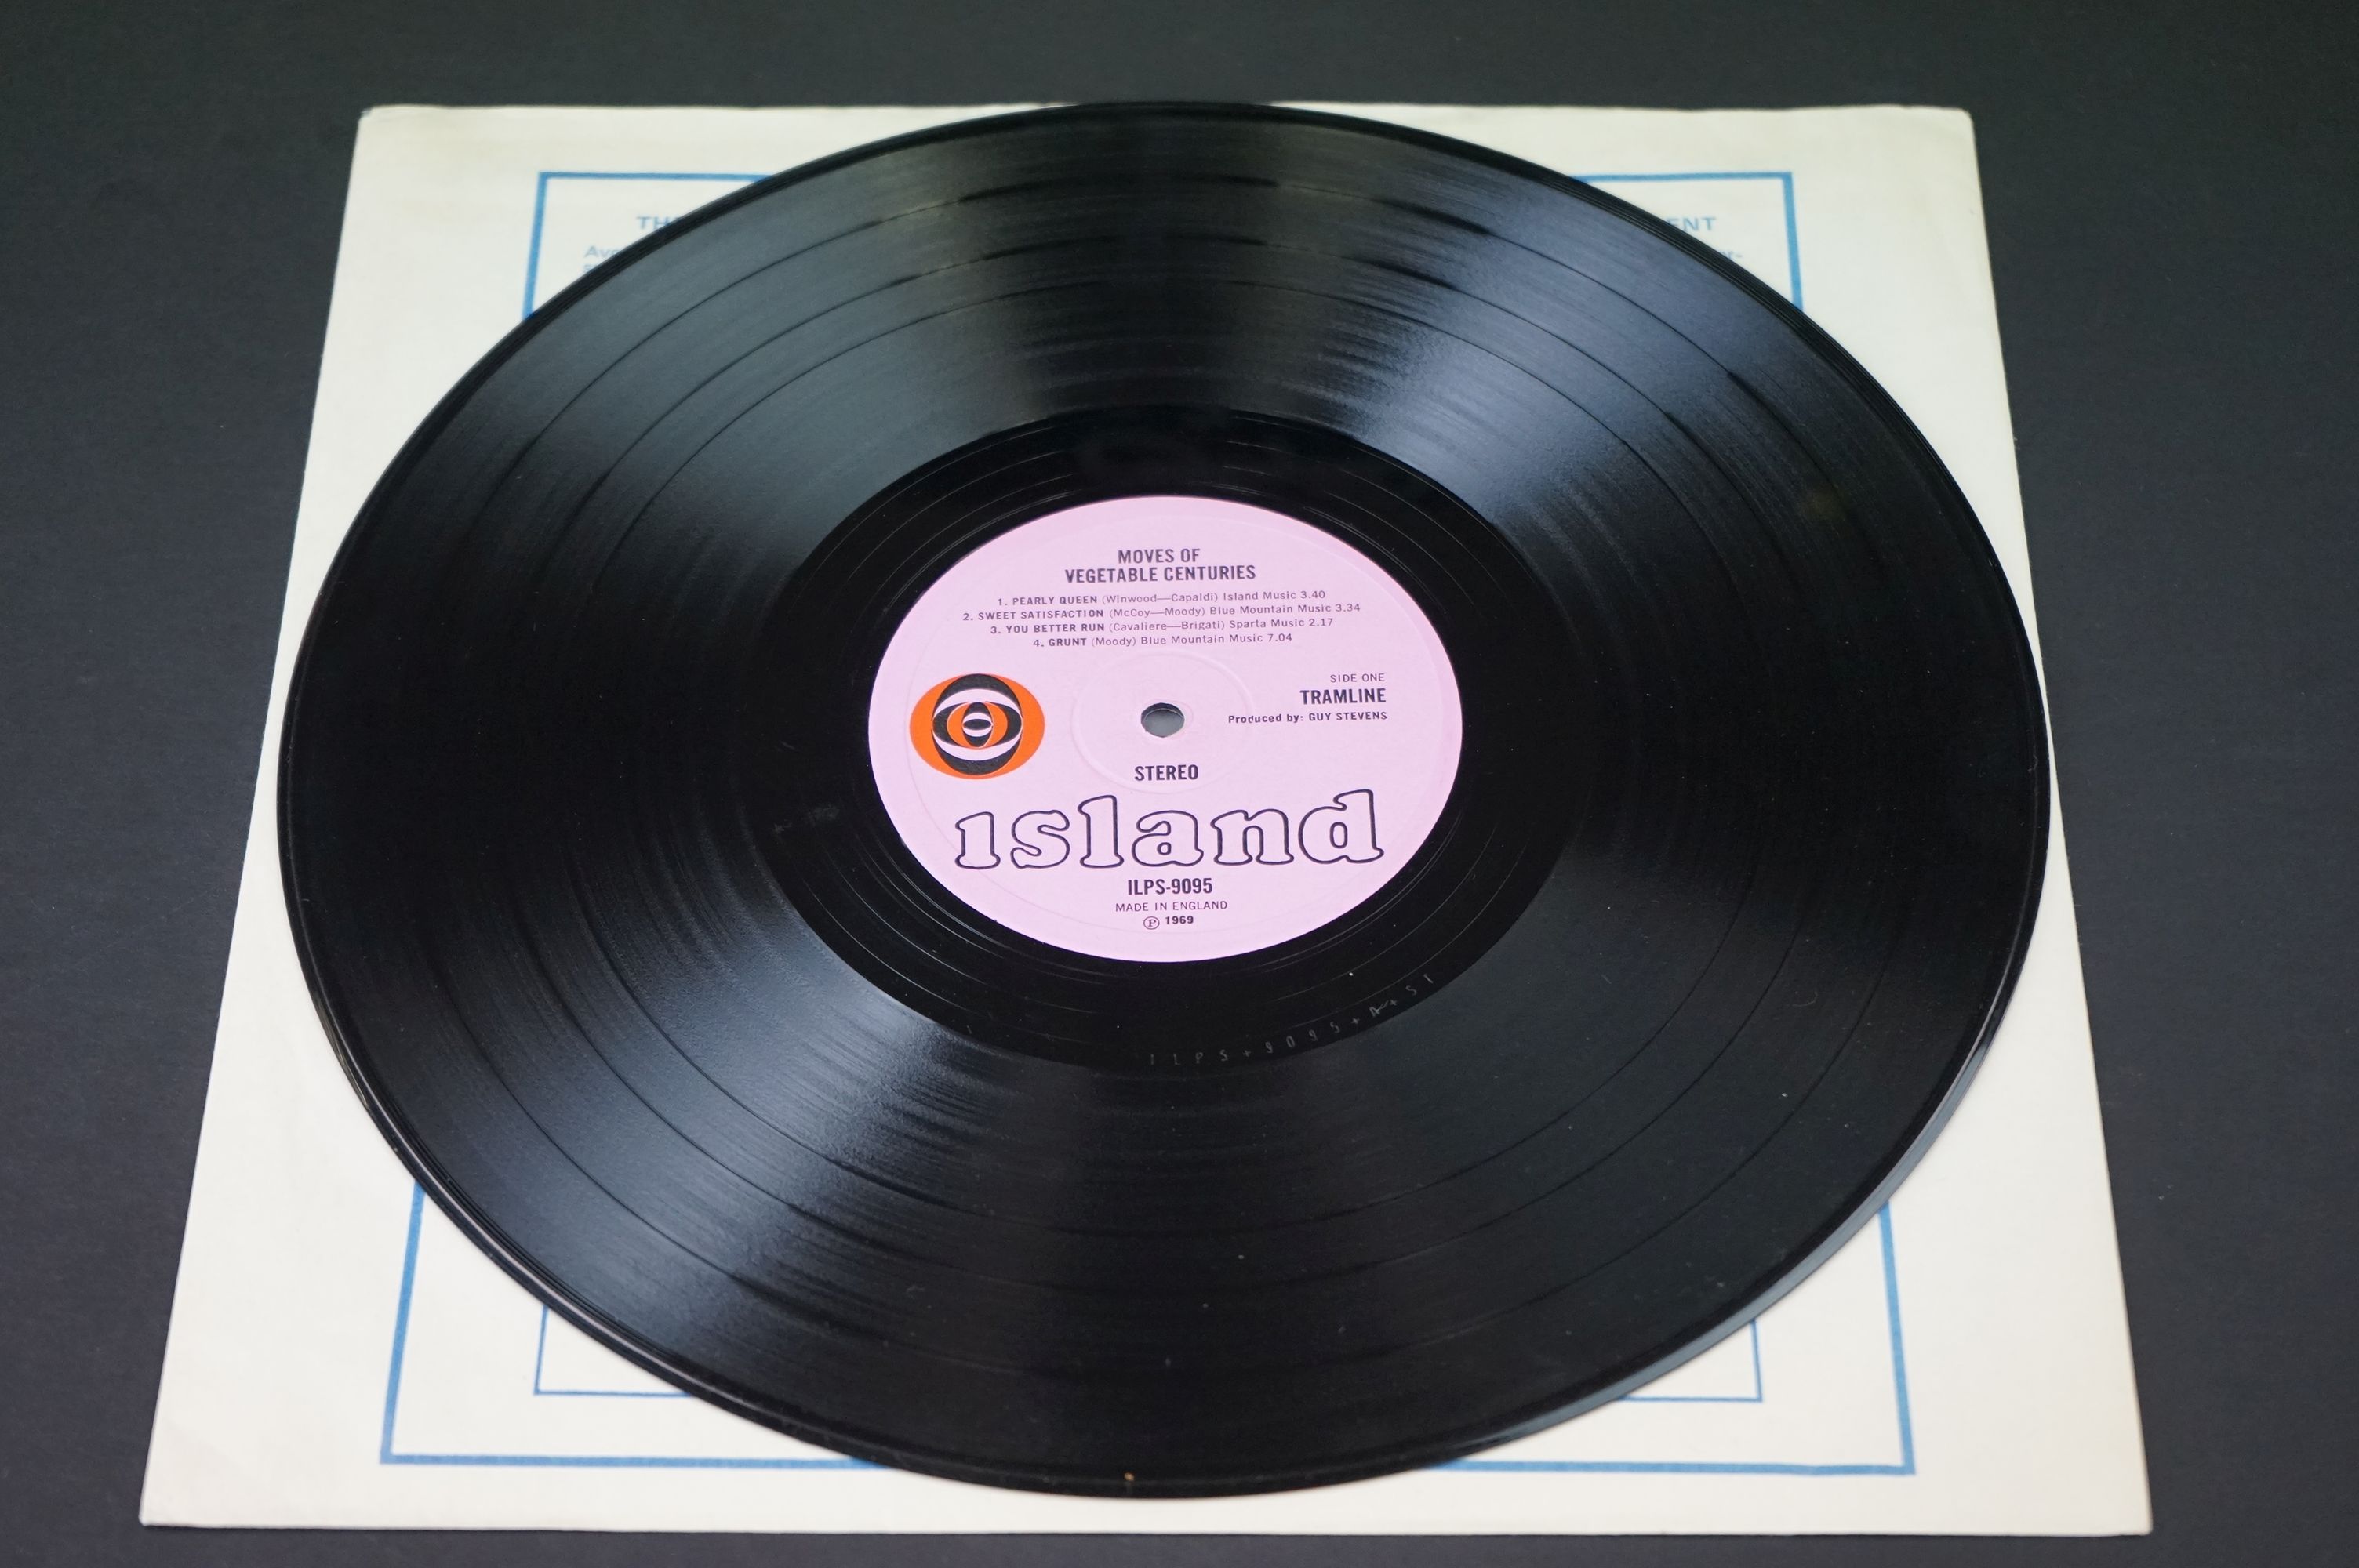 Vinyl - Tramline – Moves Of Vegetable Centuries, original UK 1969 1st pressing, pink Island label - Image 2 of 6